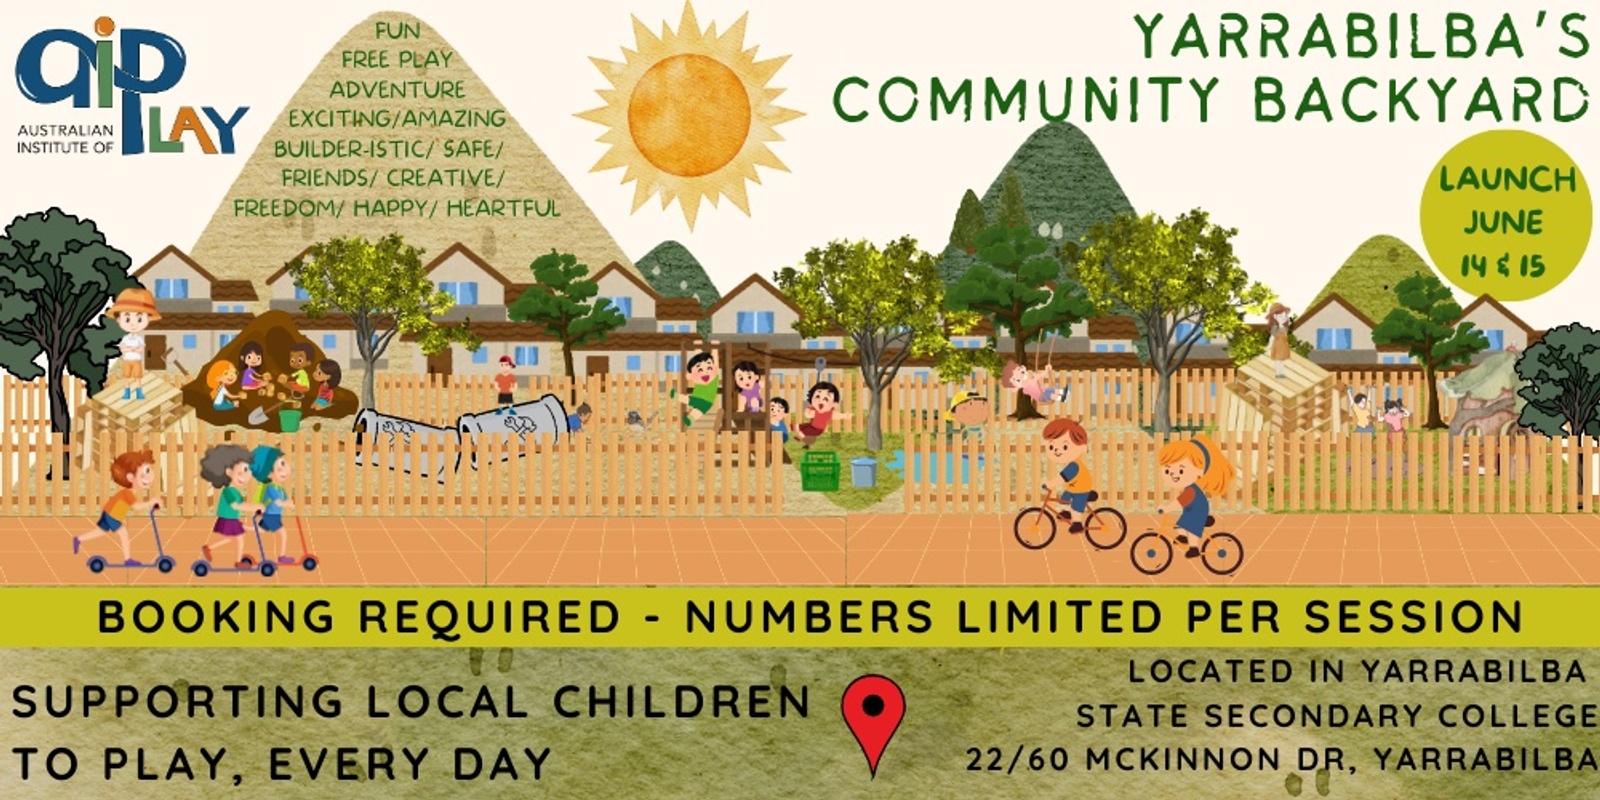 Banner image for Community Backyard Launch Event - Yarrabilba - June 14 & 15